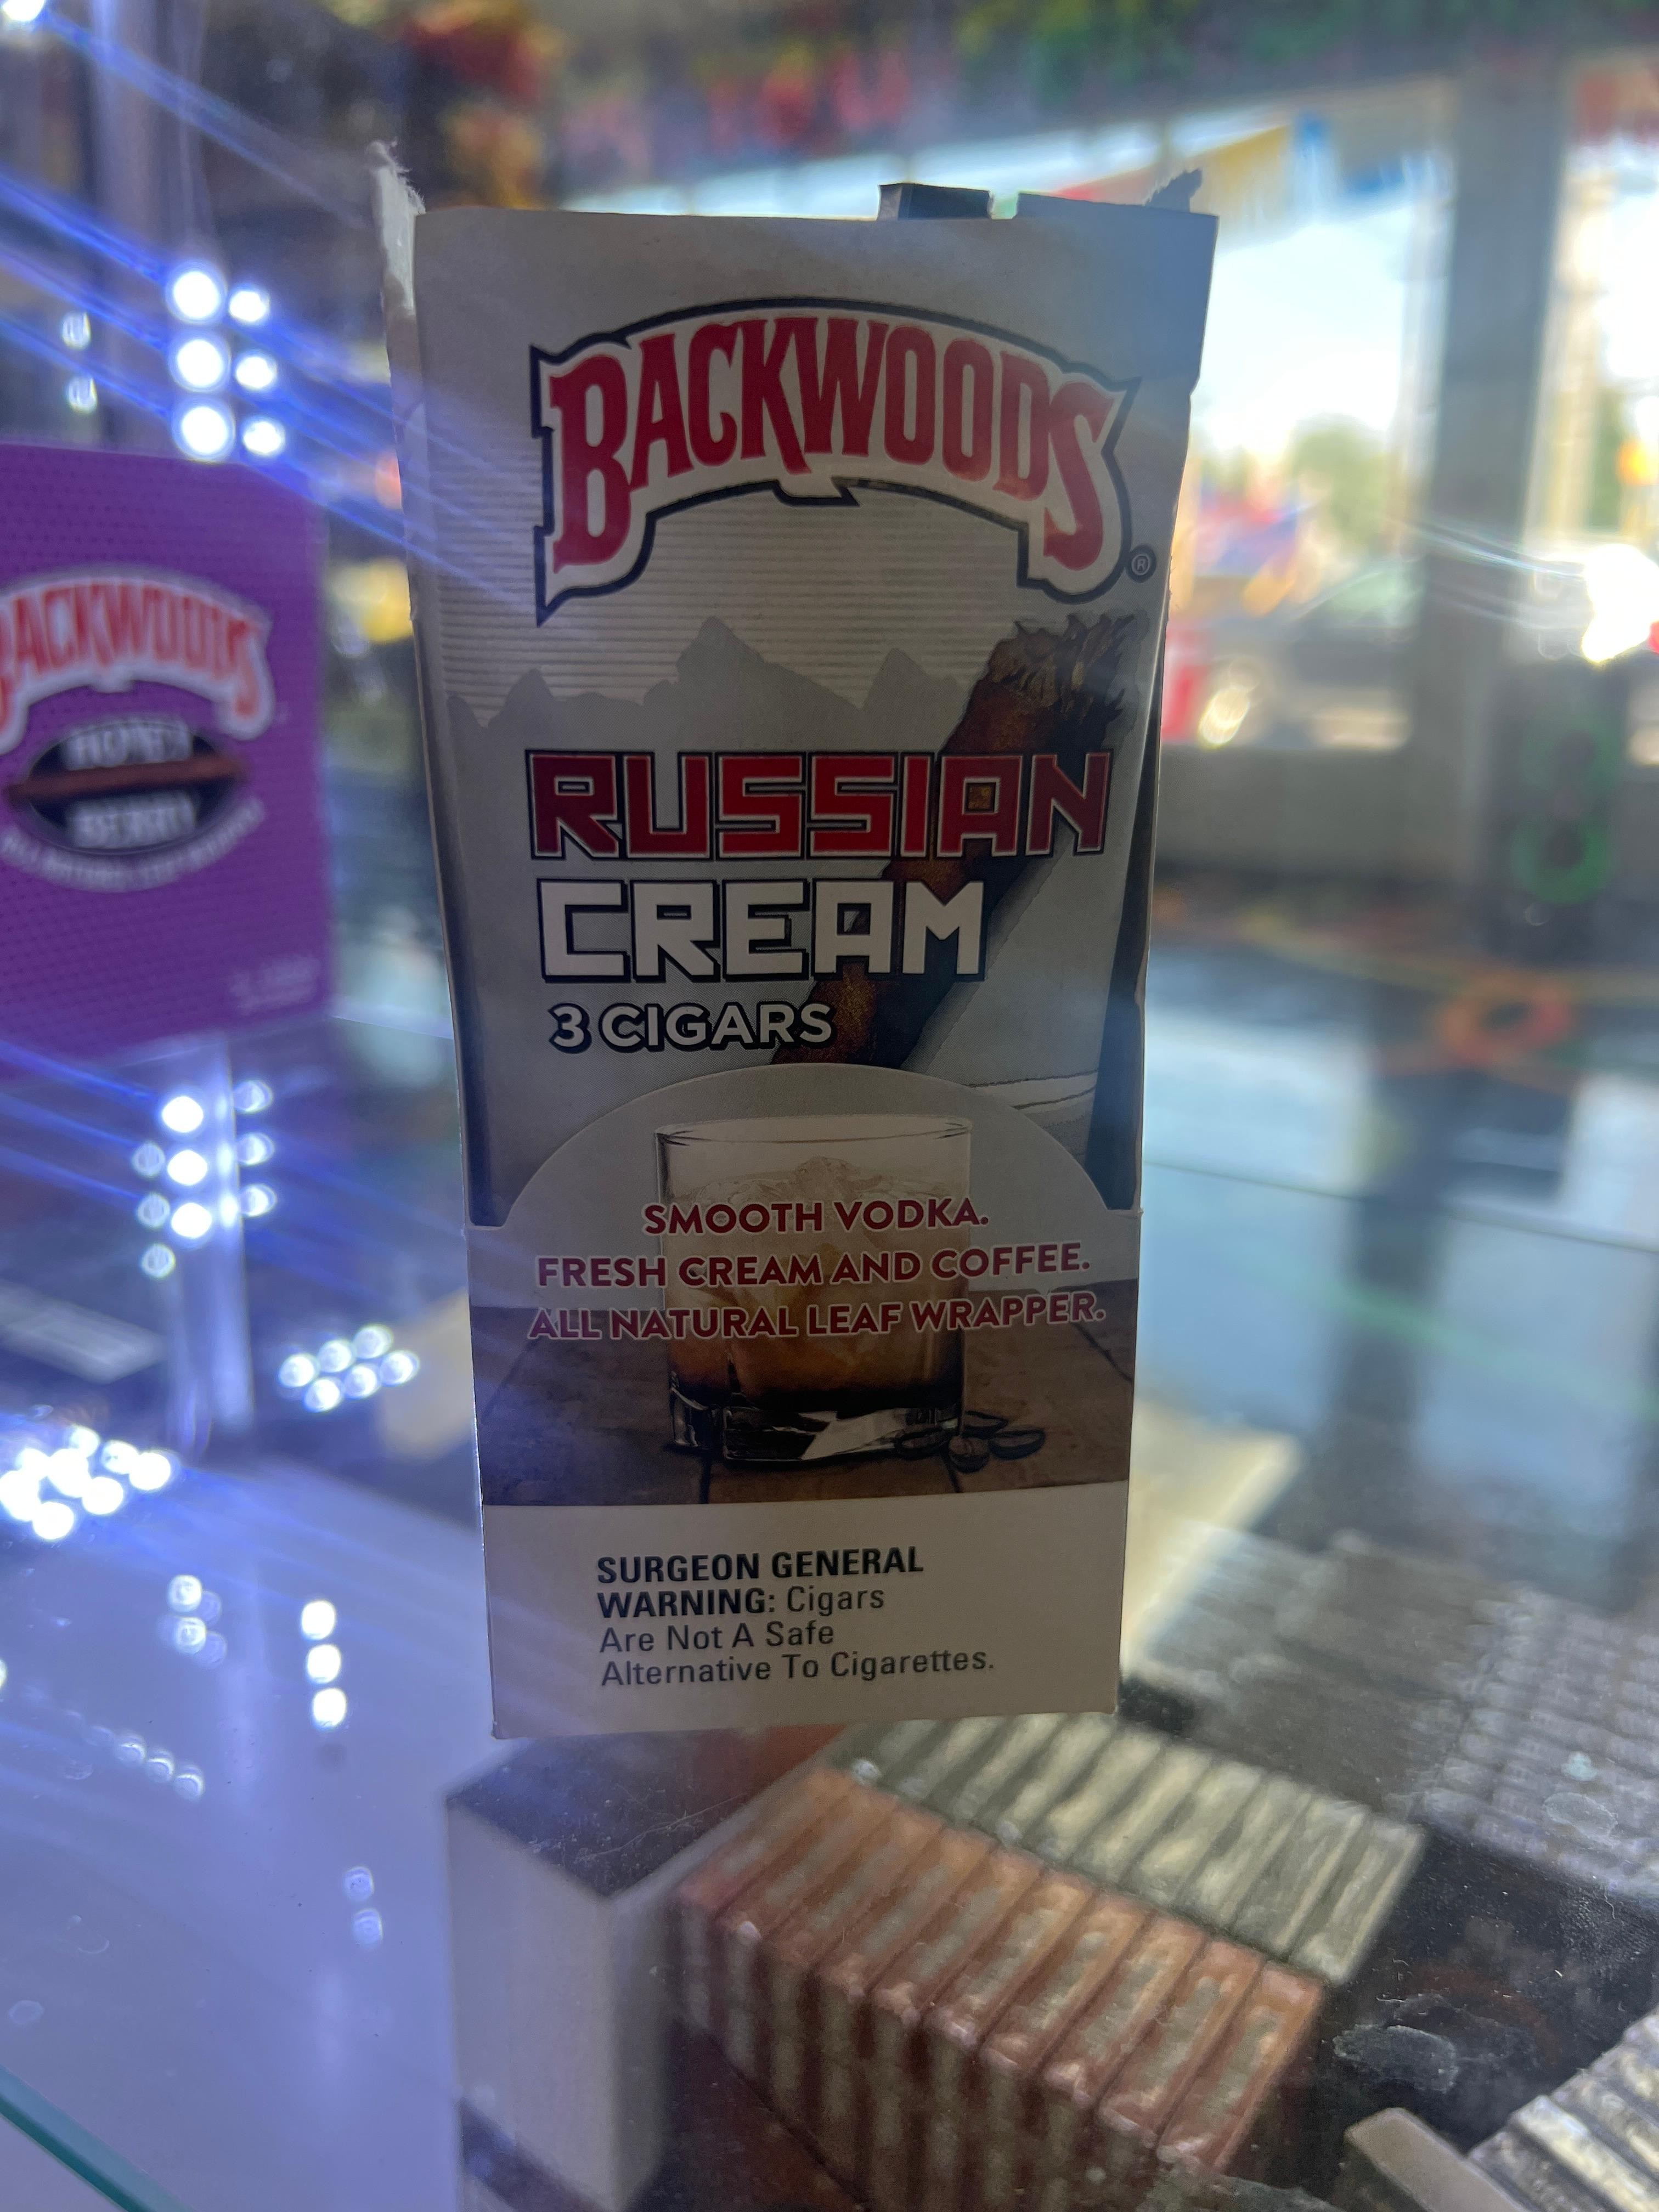 Backwoods 3Pk Russian Cream